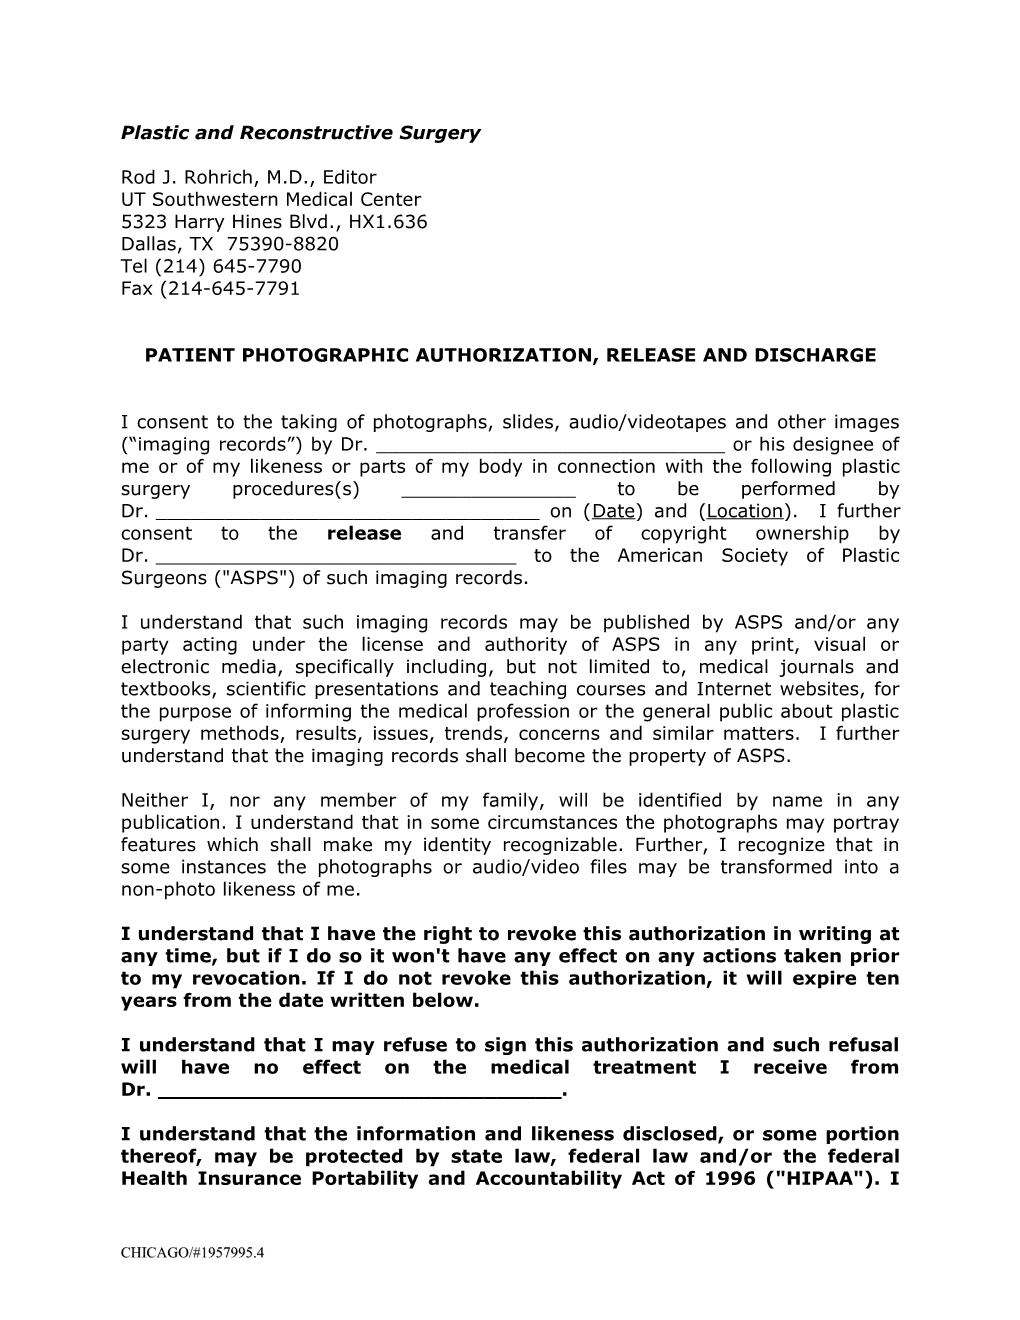 Revised Patient Photographic Authorization & Release